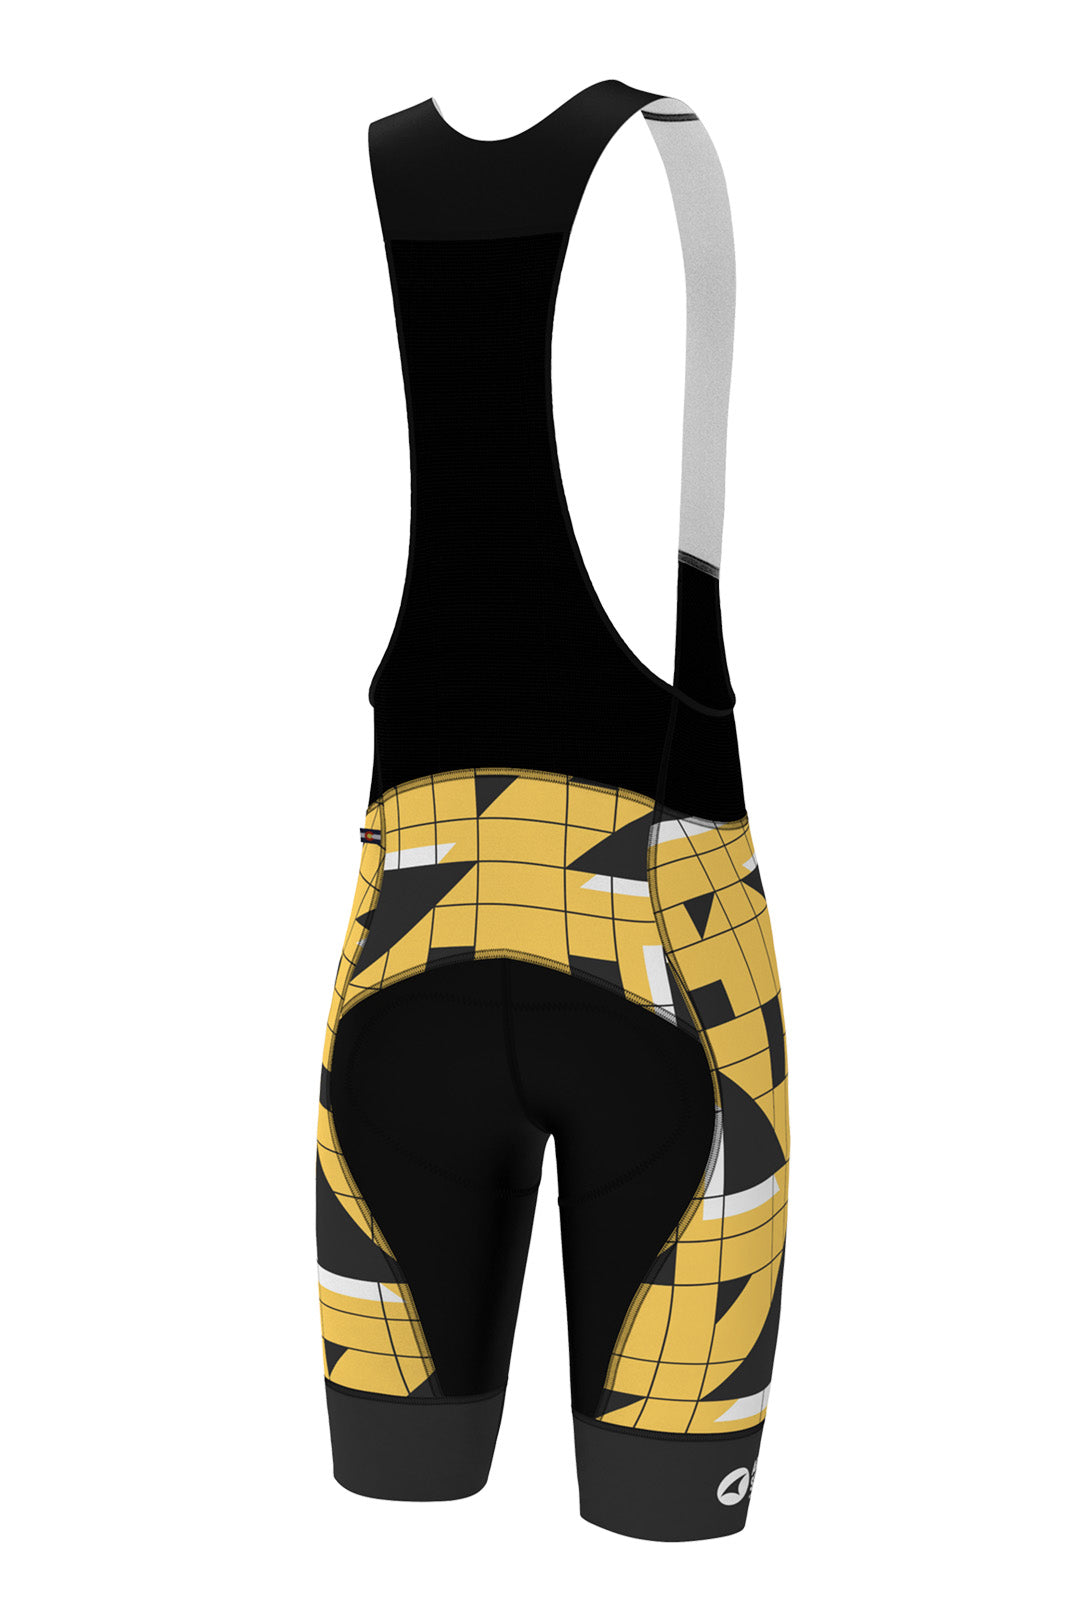 Men's Cycling Bib Shorts - Yellow Sandra Fettingis Design - Back View